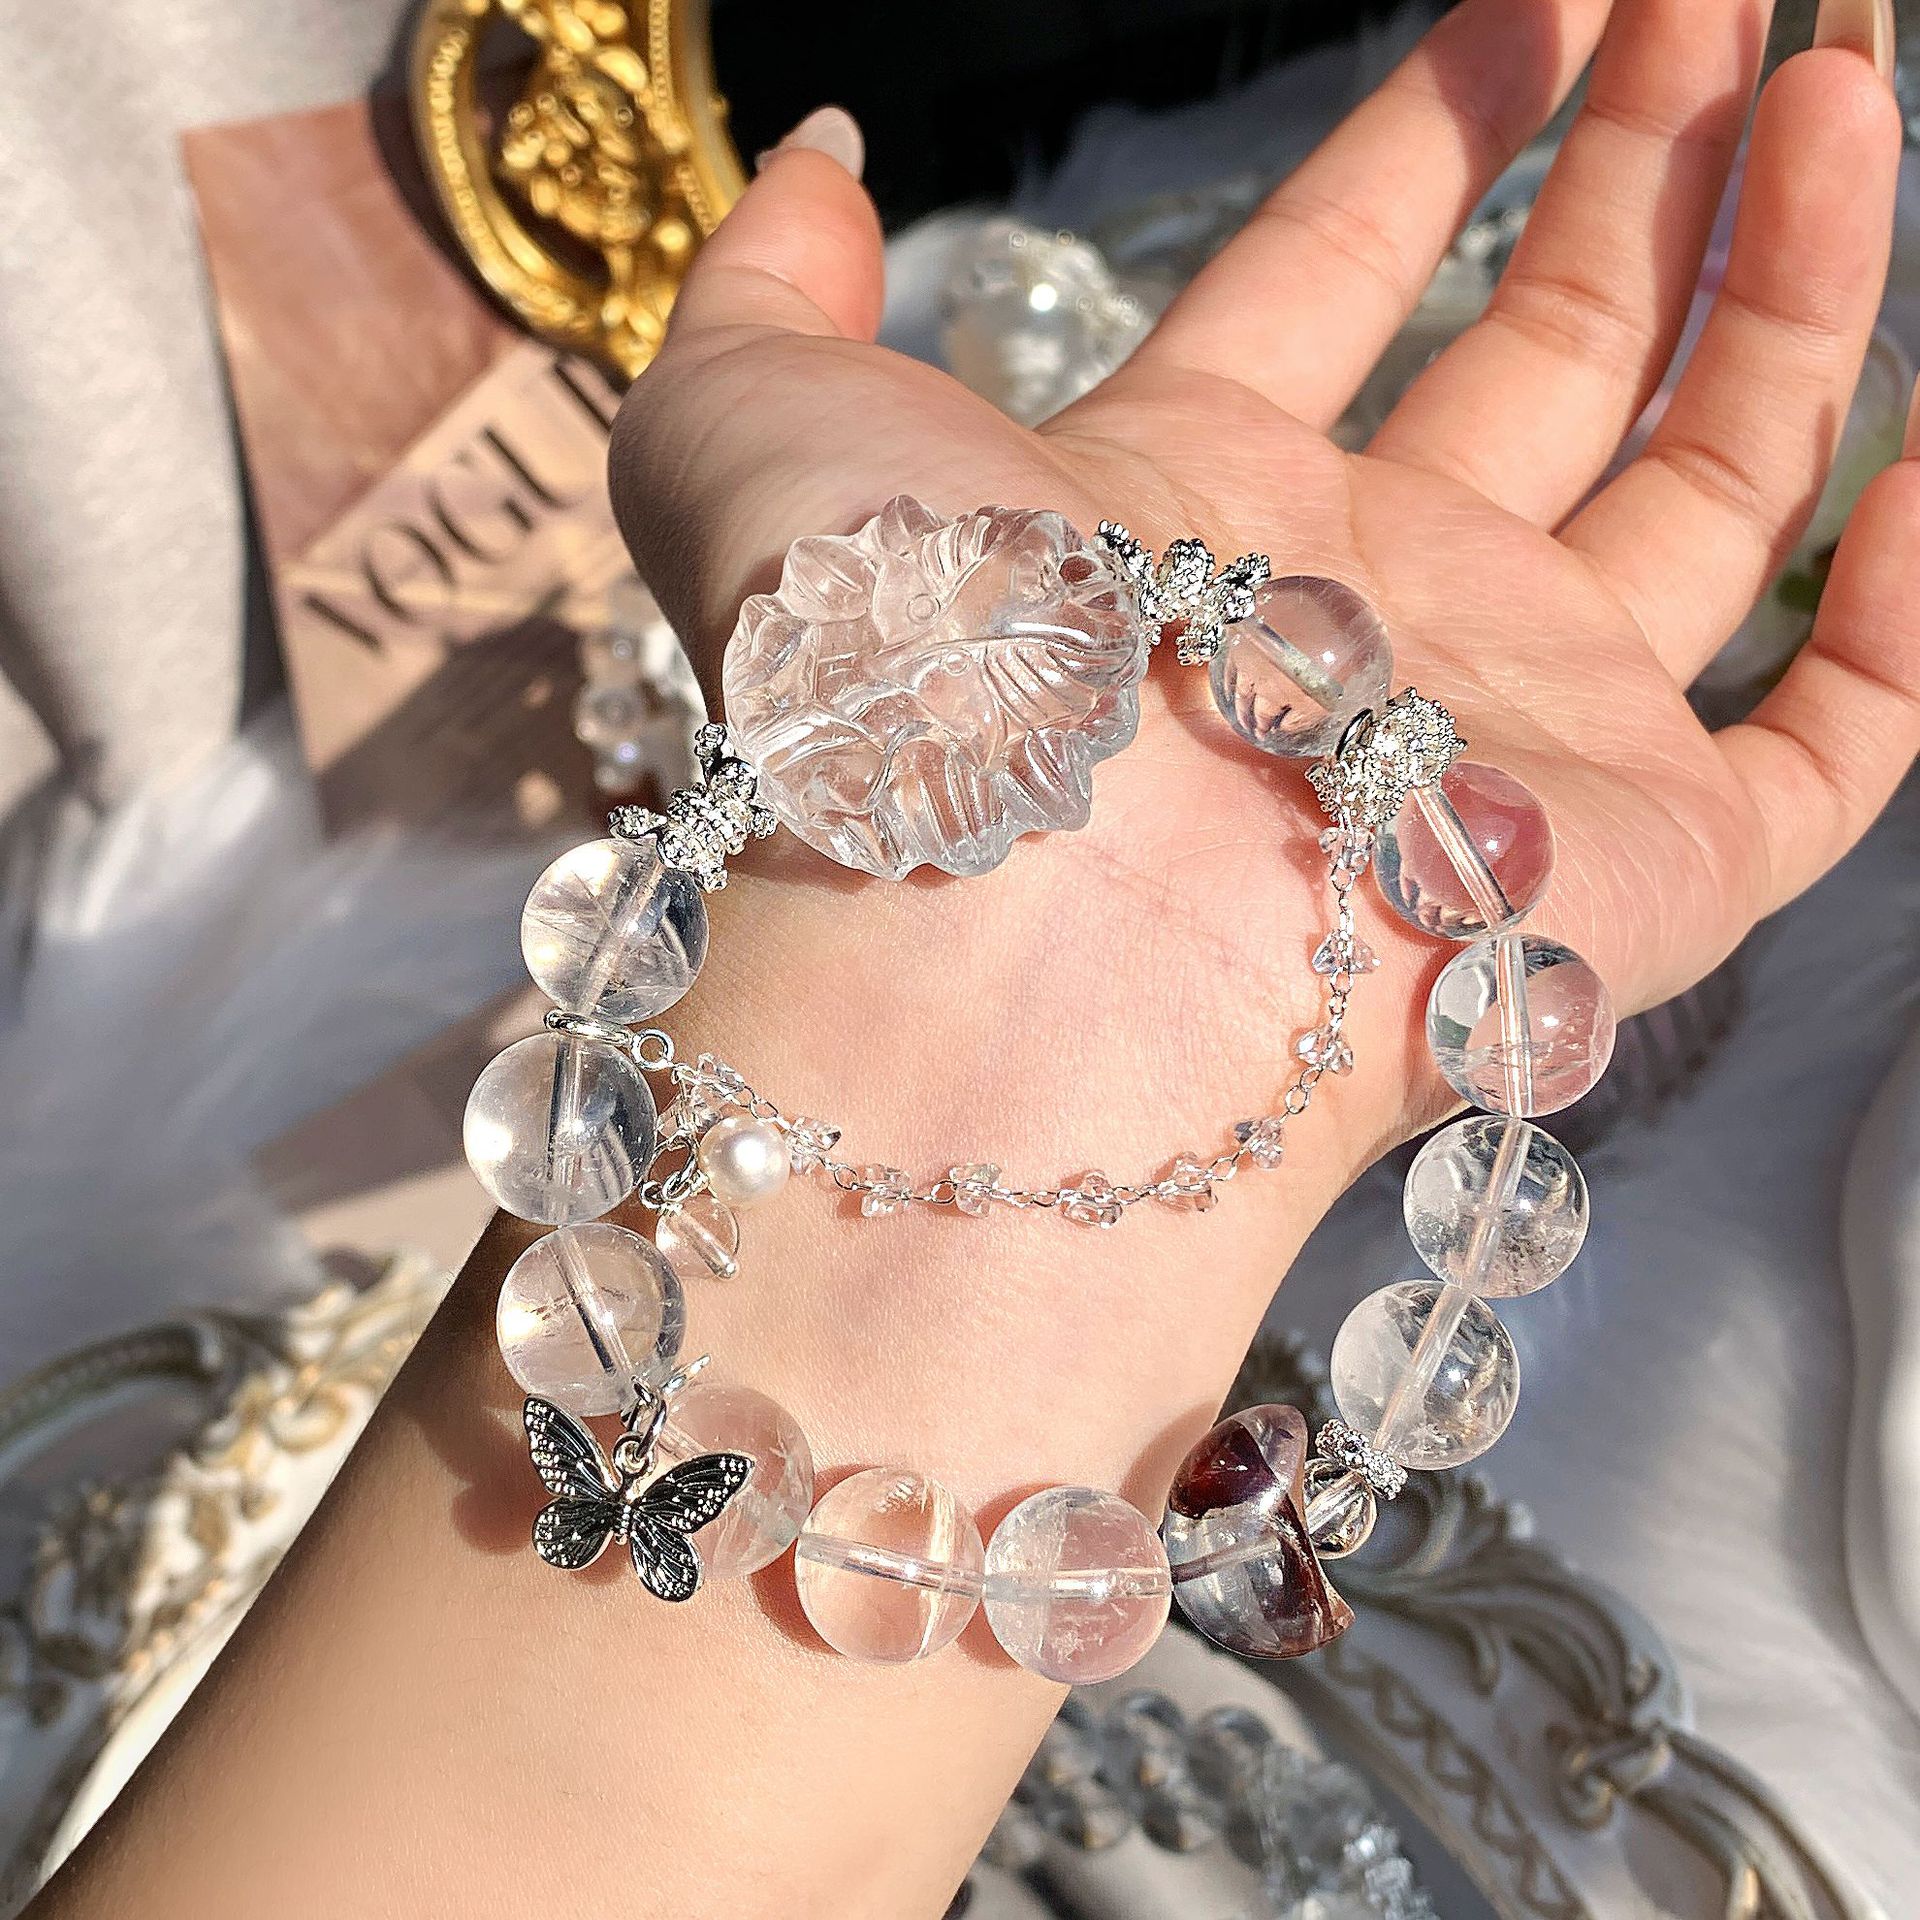 Bracelets of crystal quartz square shape beads